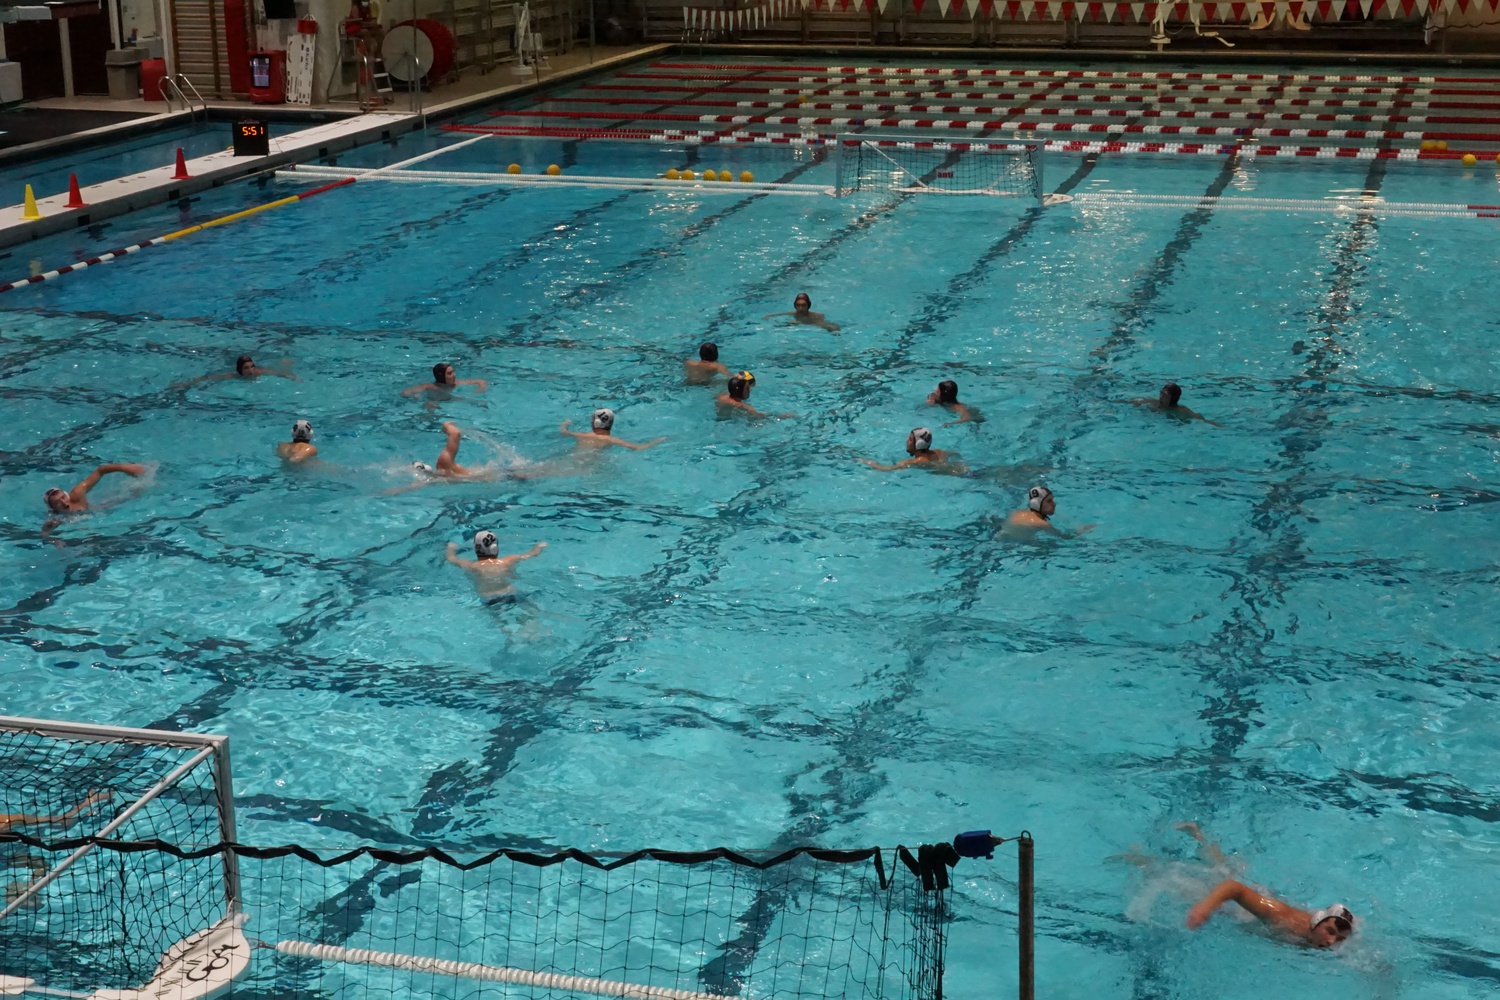 Harvard men's water polo in action in Blodgett Pool on October 29, 2022.